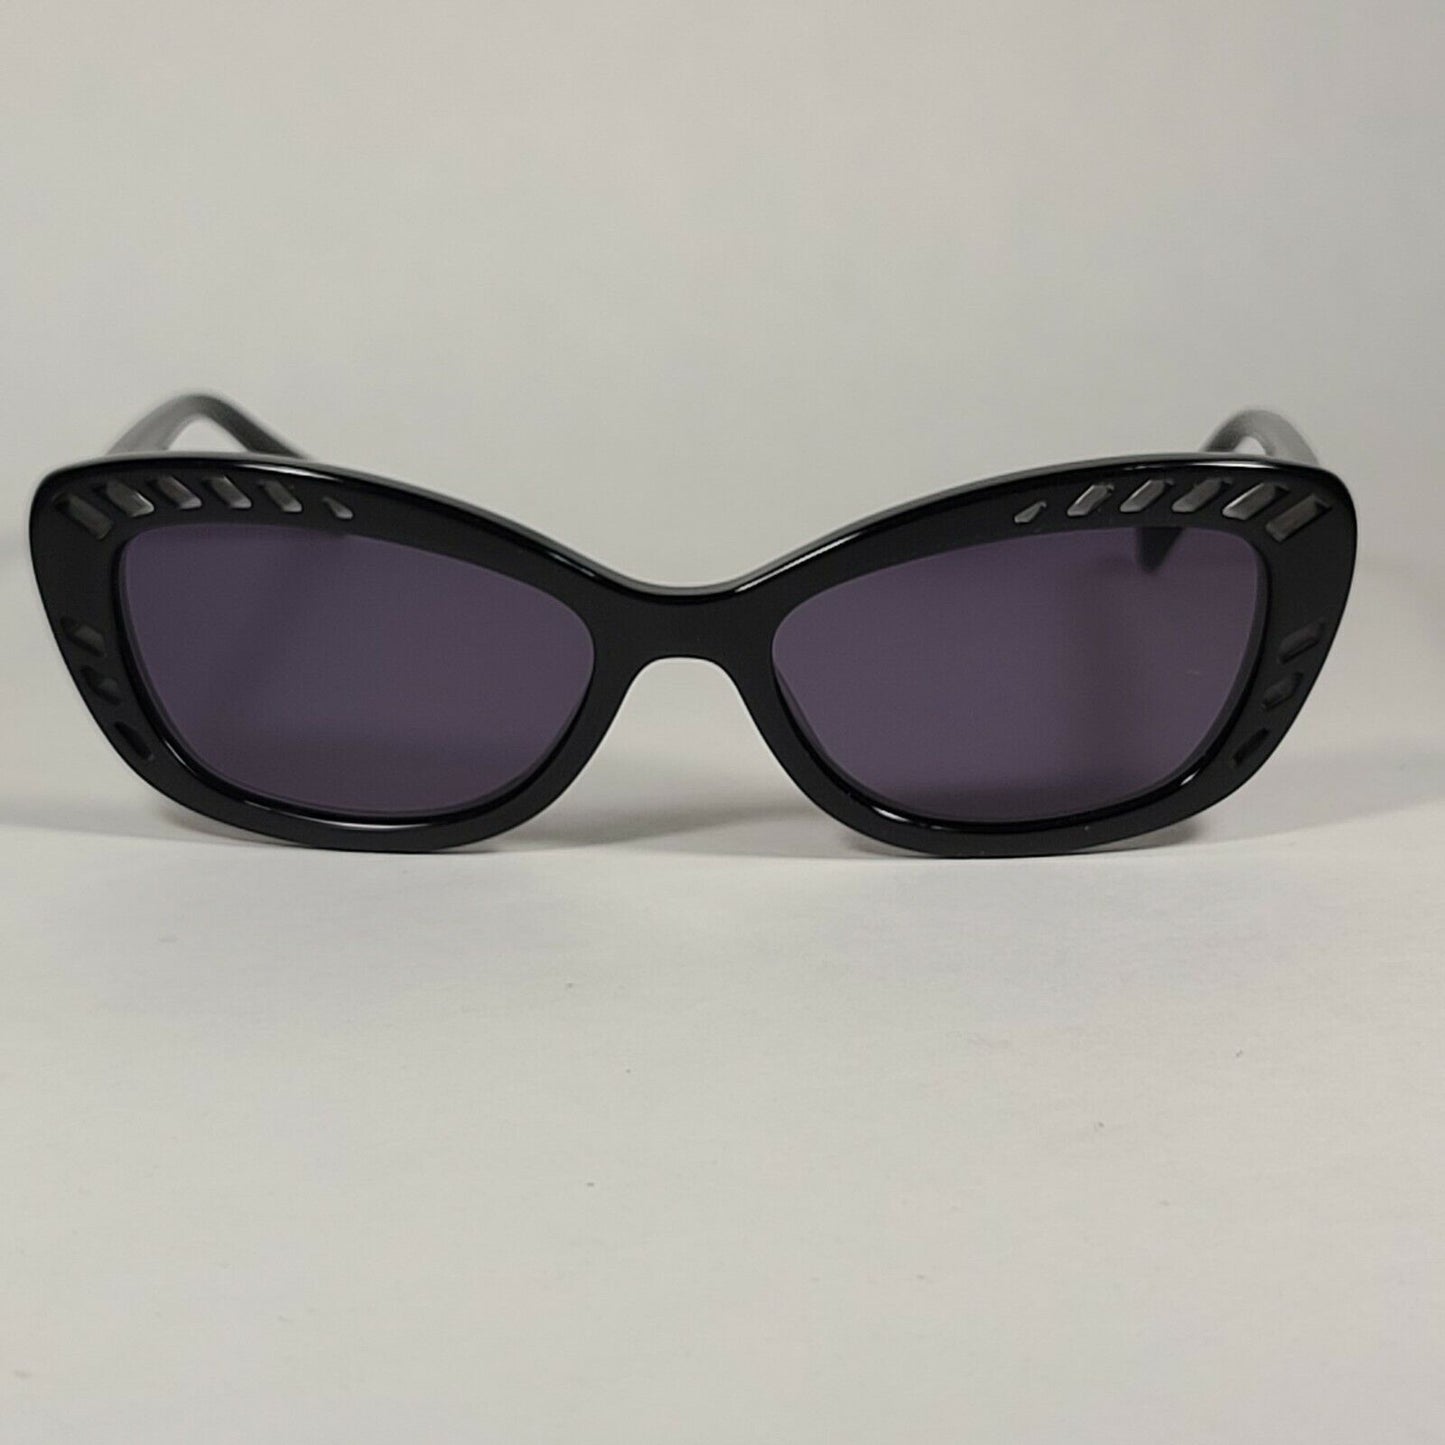 Kendall & Kylie KK5024D-001 00mm New Sunglasses